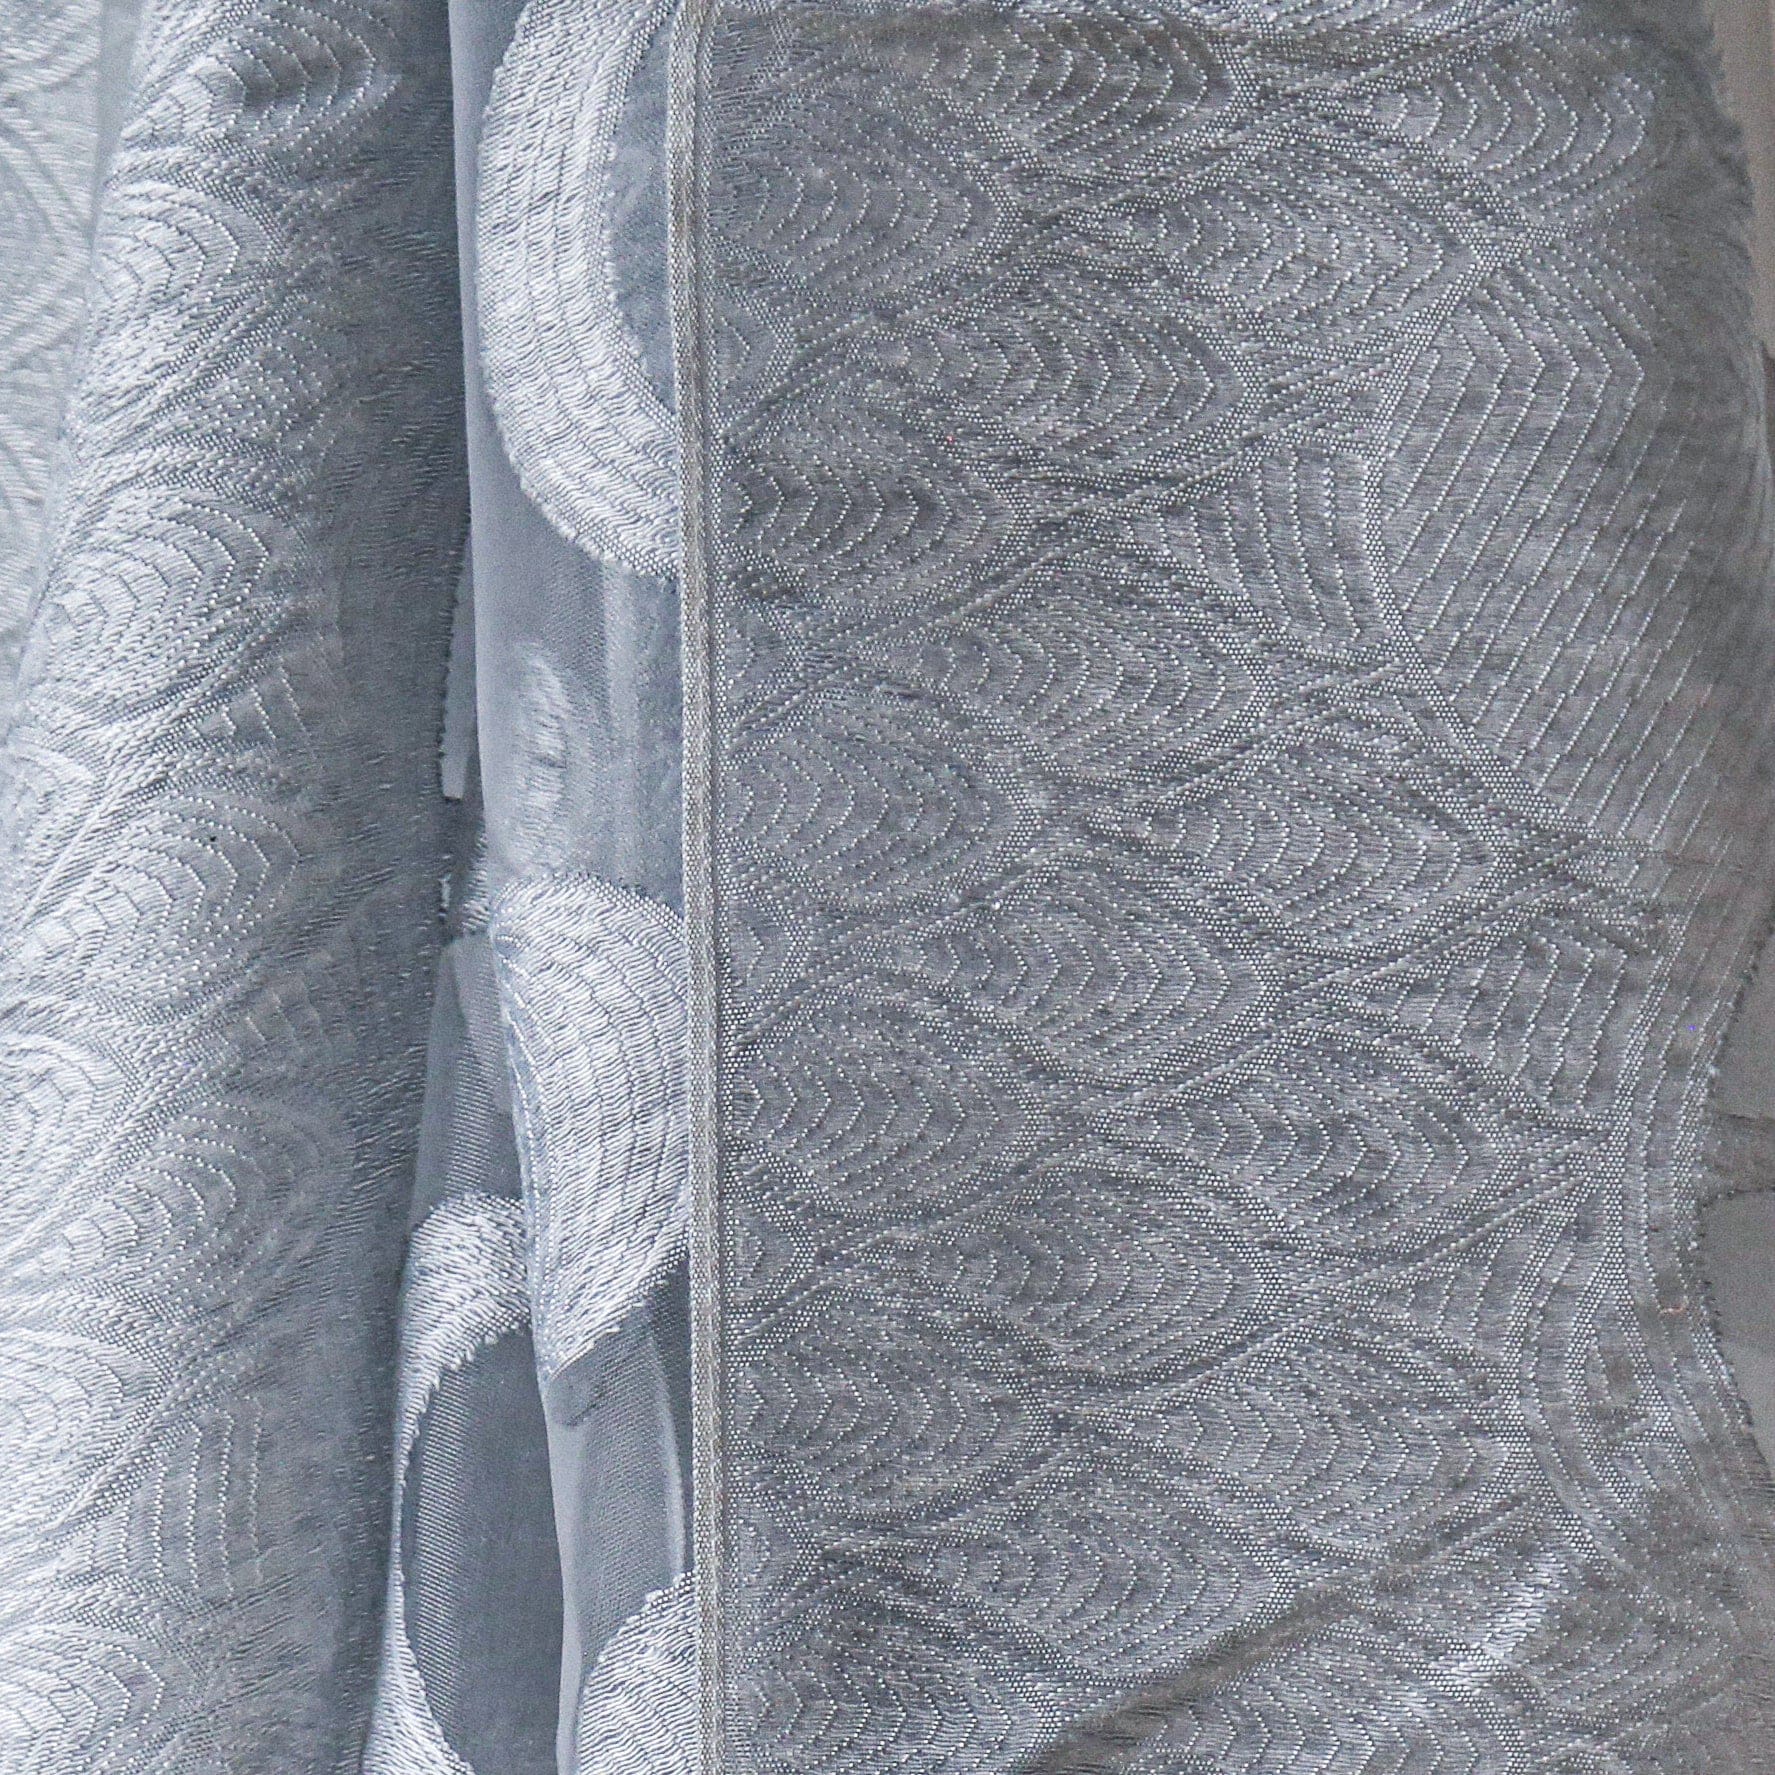 Lods tørklæde - Grå - Tørklæde